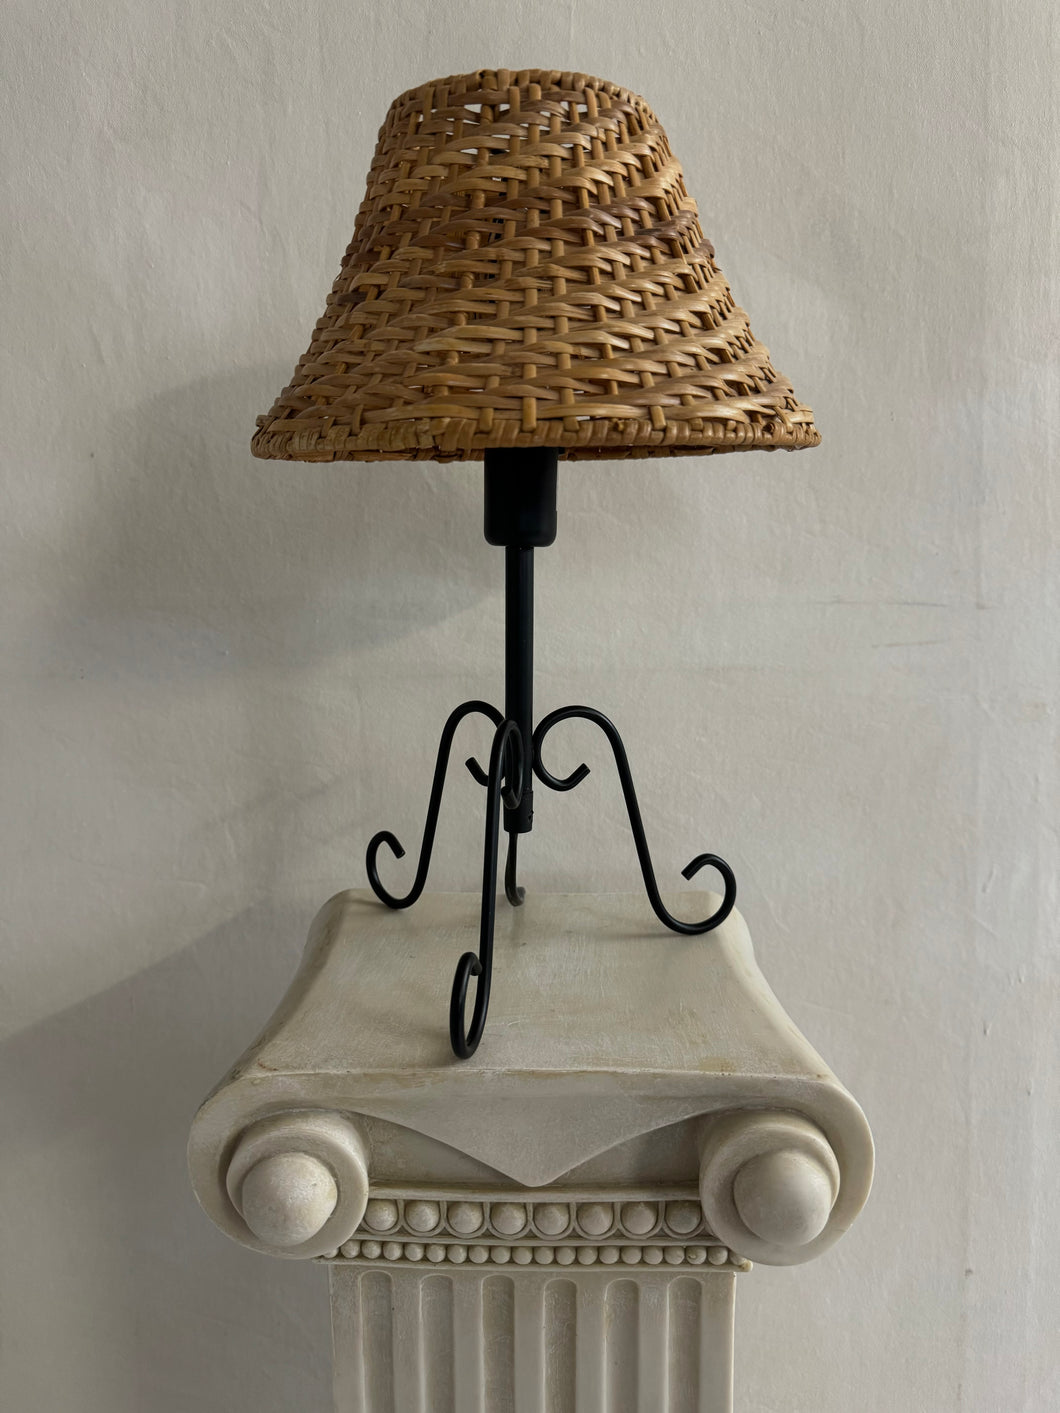 French Rattan Lamp